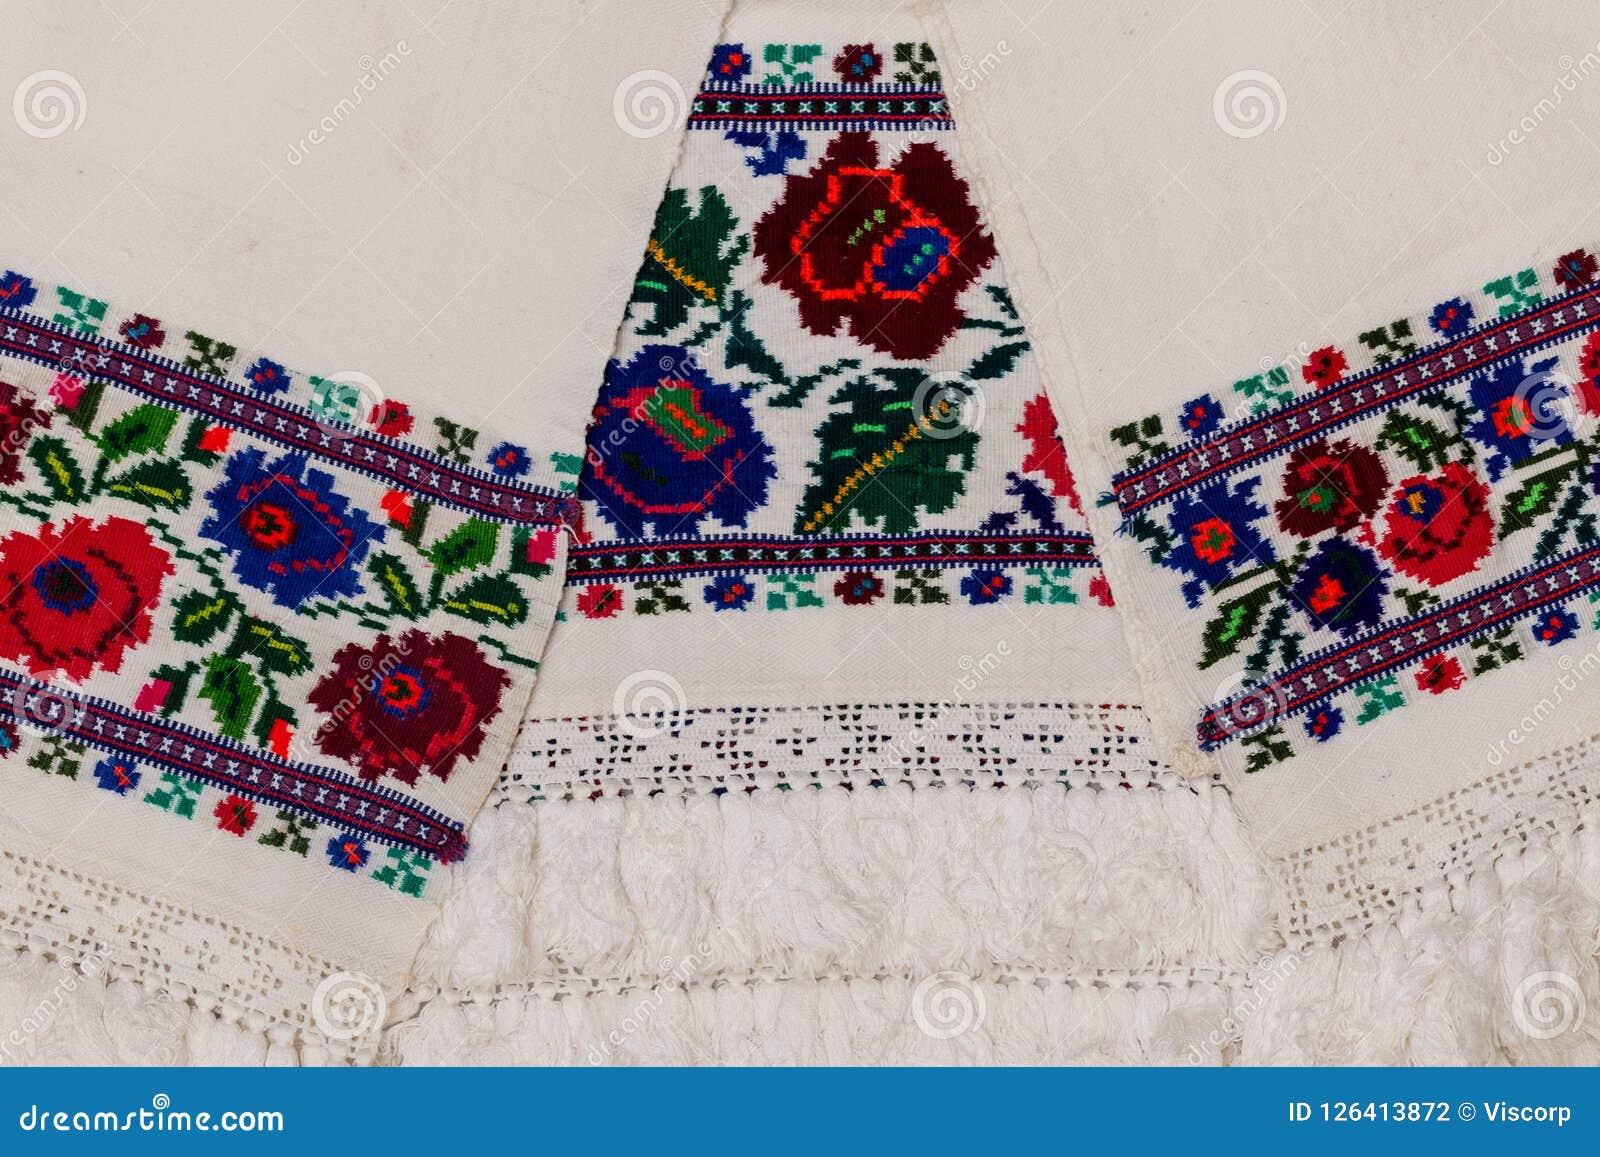 Eastern European Decor Ethnic Cloth Bulgarian Doily Bulgarian Embroidery Handmade Linen Embroidered Table Cloth Doily Ethnic Home Decor